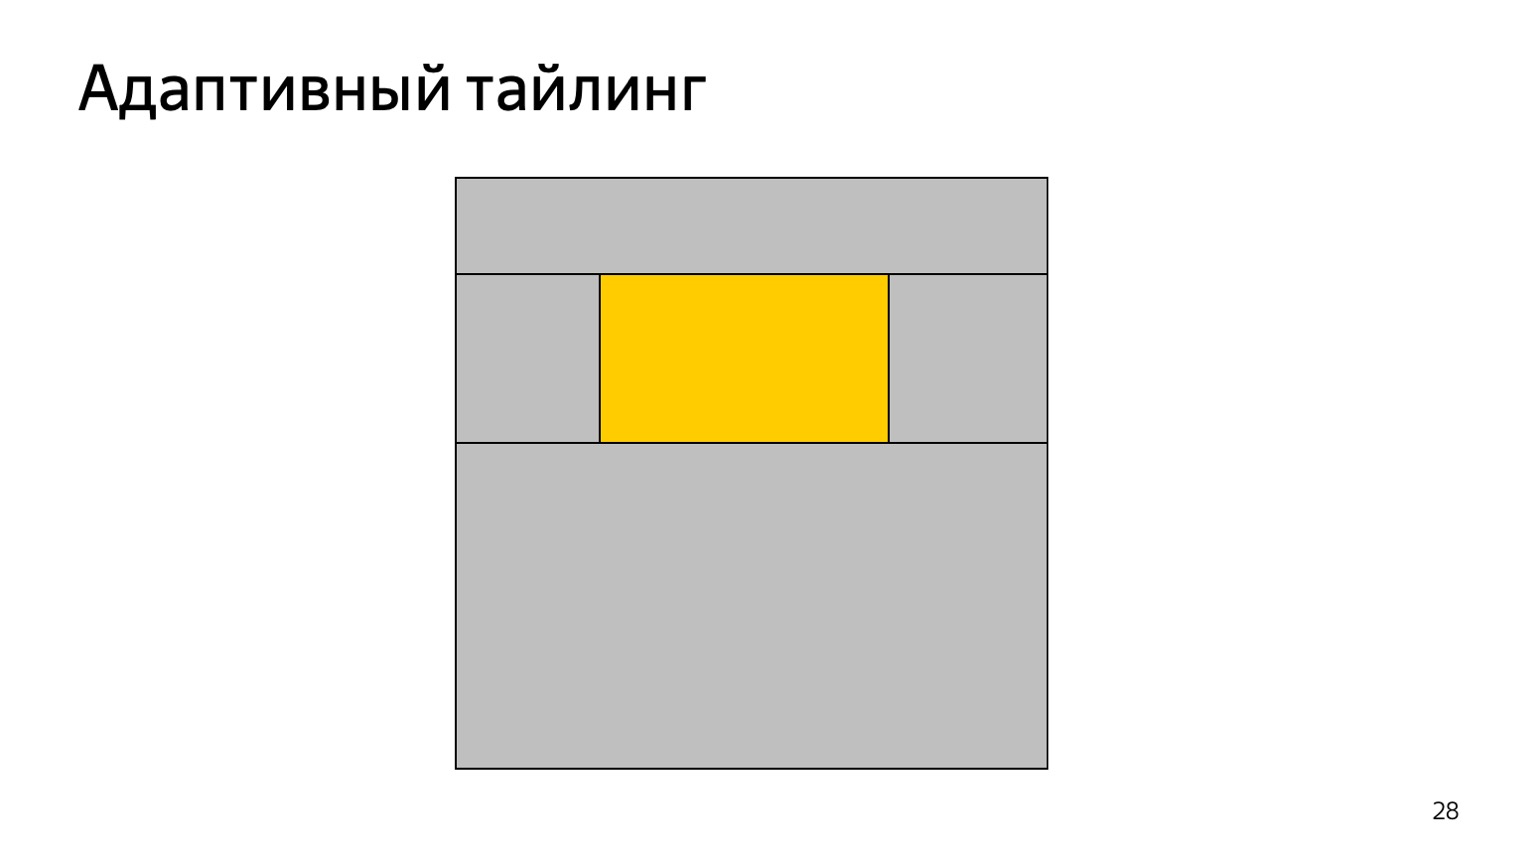 Как рисует браузер. Доклад Яндекса - 27